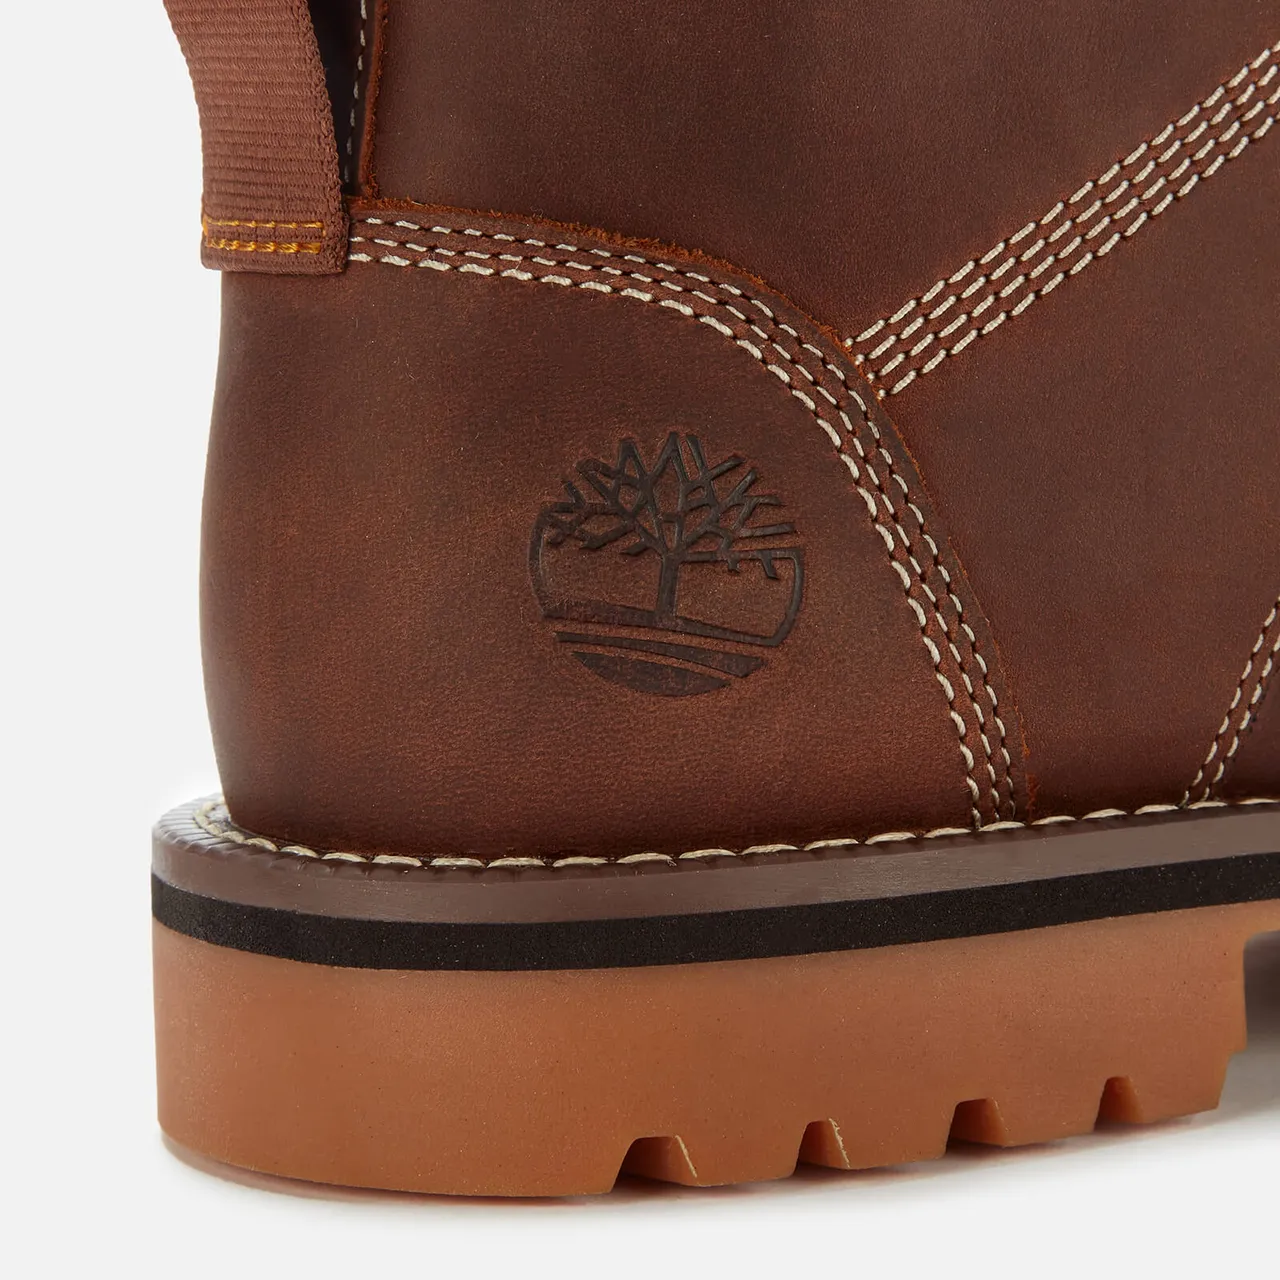 Timberland Men's Larchmont II Leather Chukka Boots - Rust - UK